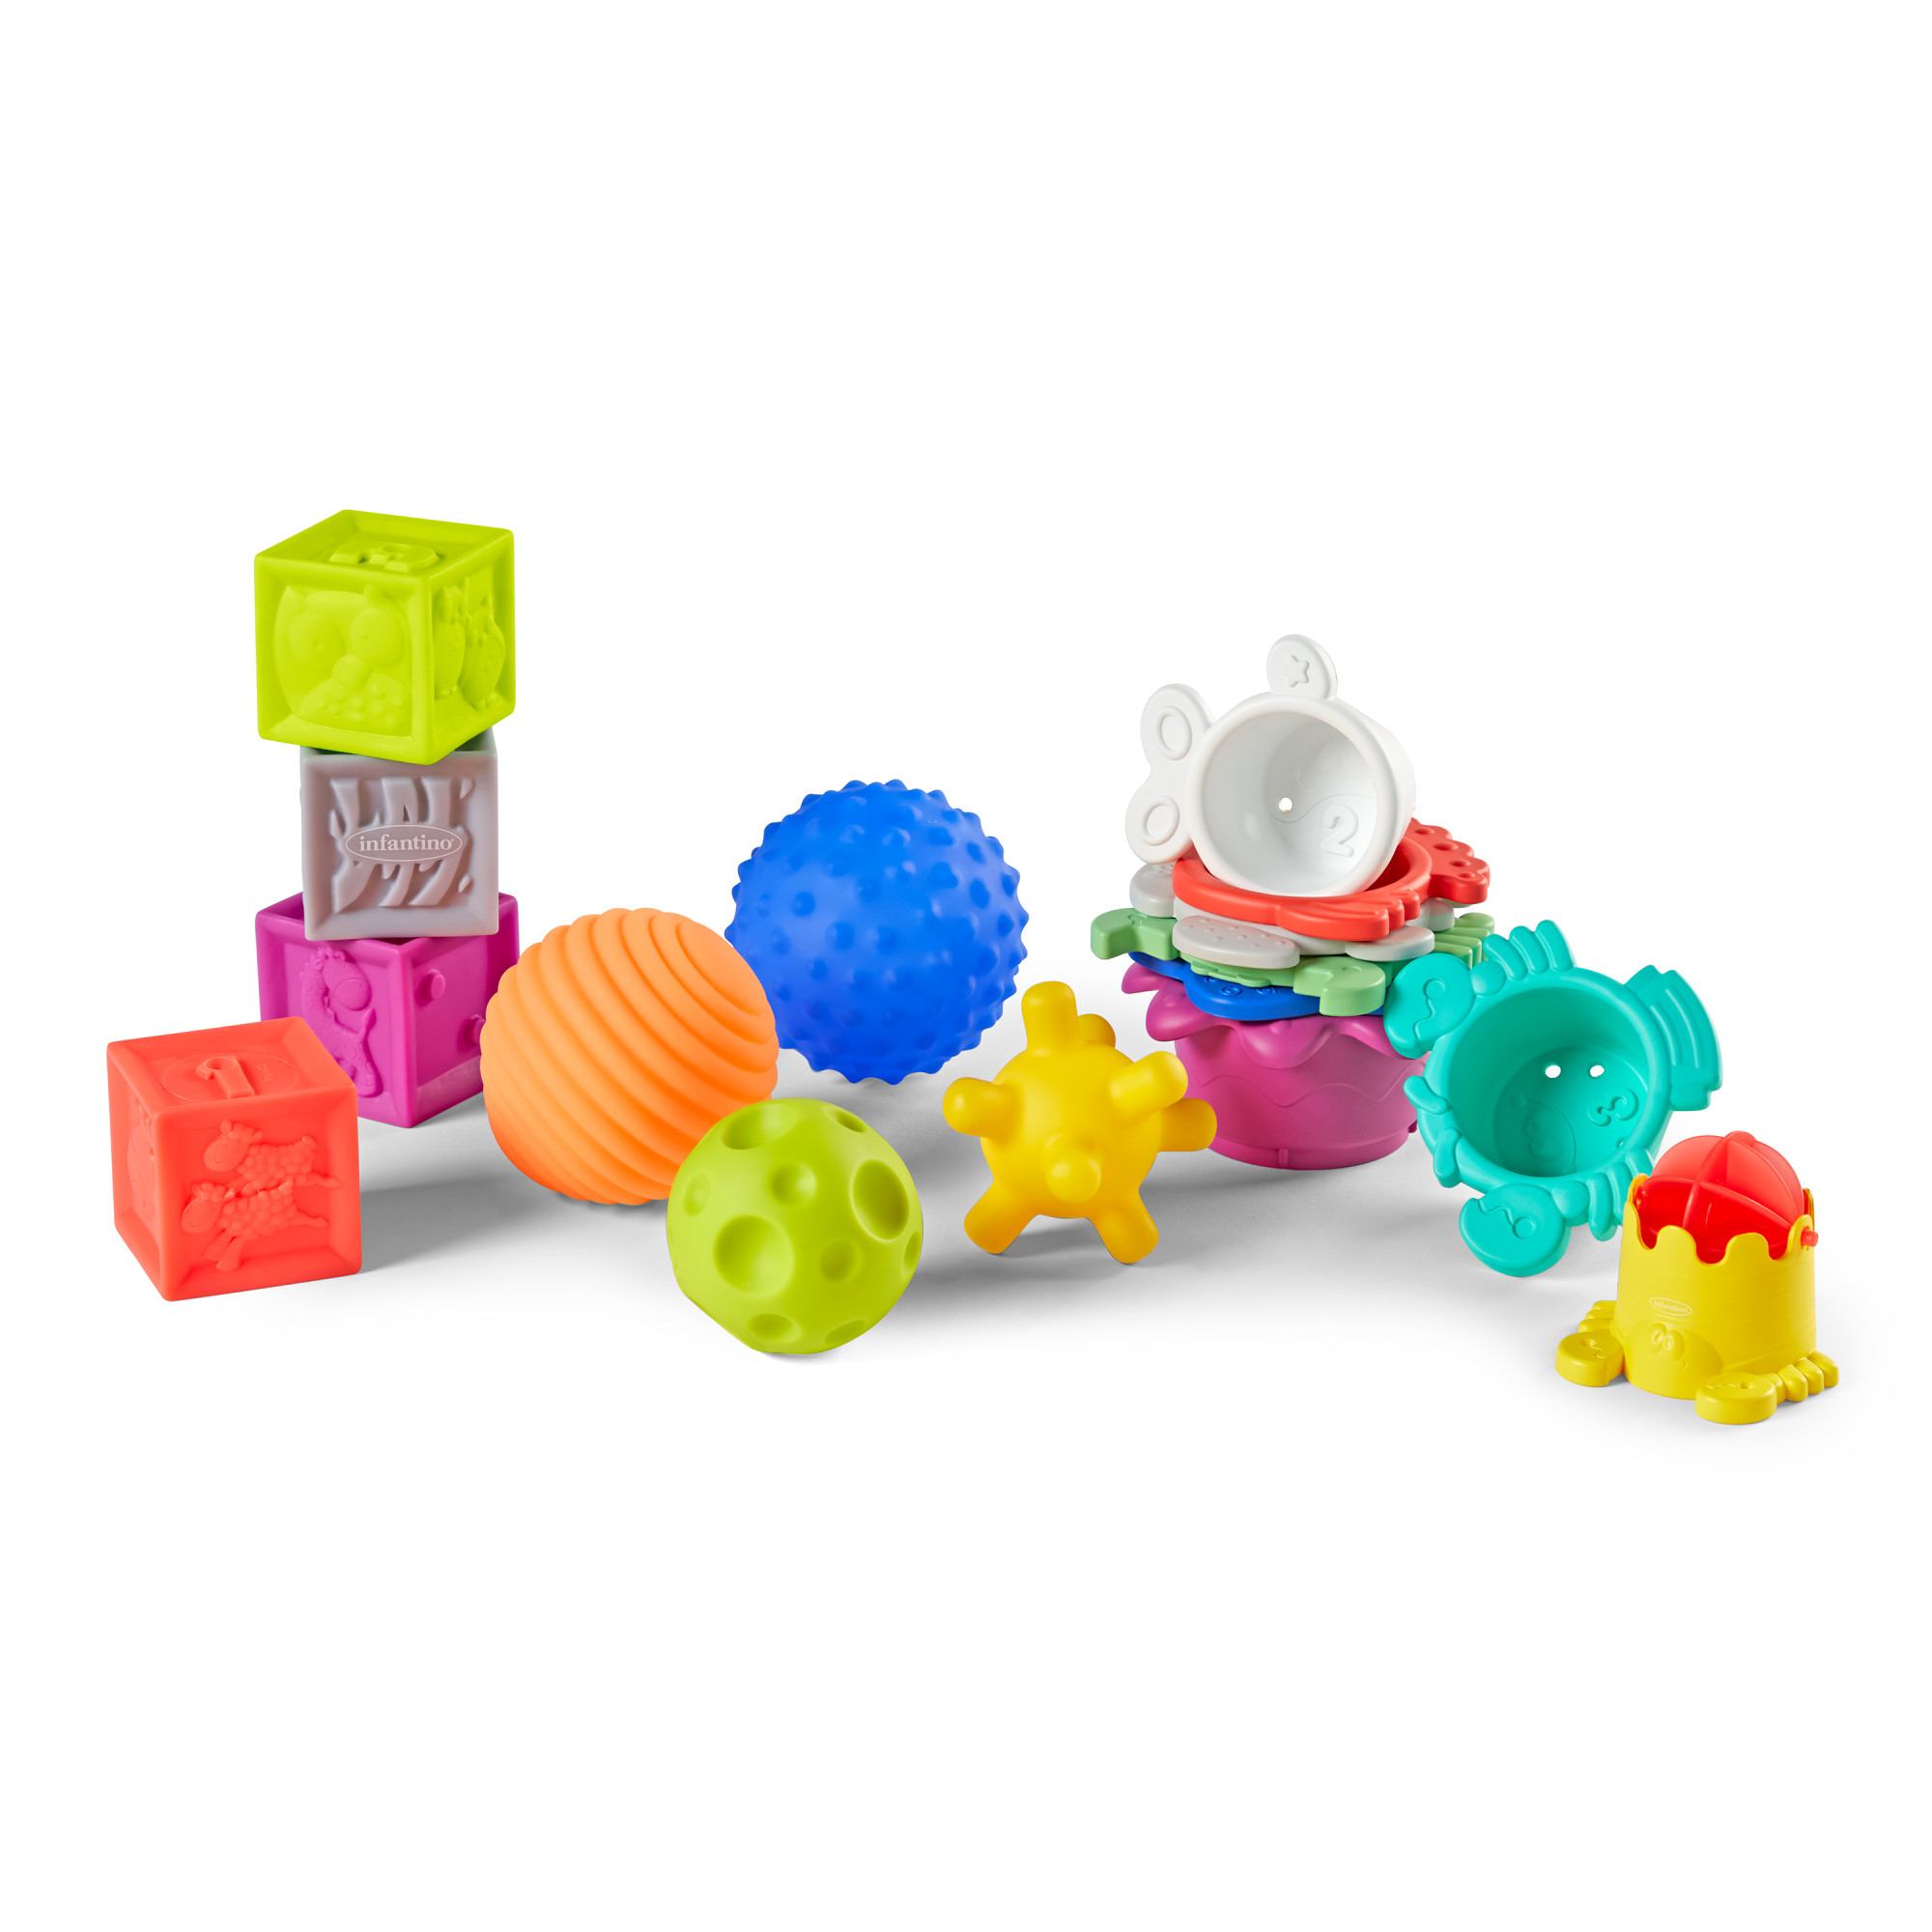 Infantino Sensory Balls, Blocks & Cups Activity Set for Babies, 6-12 Months, Multicolor, 16-Piece Set - image 1 of 7